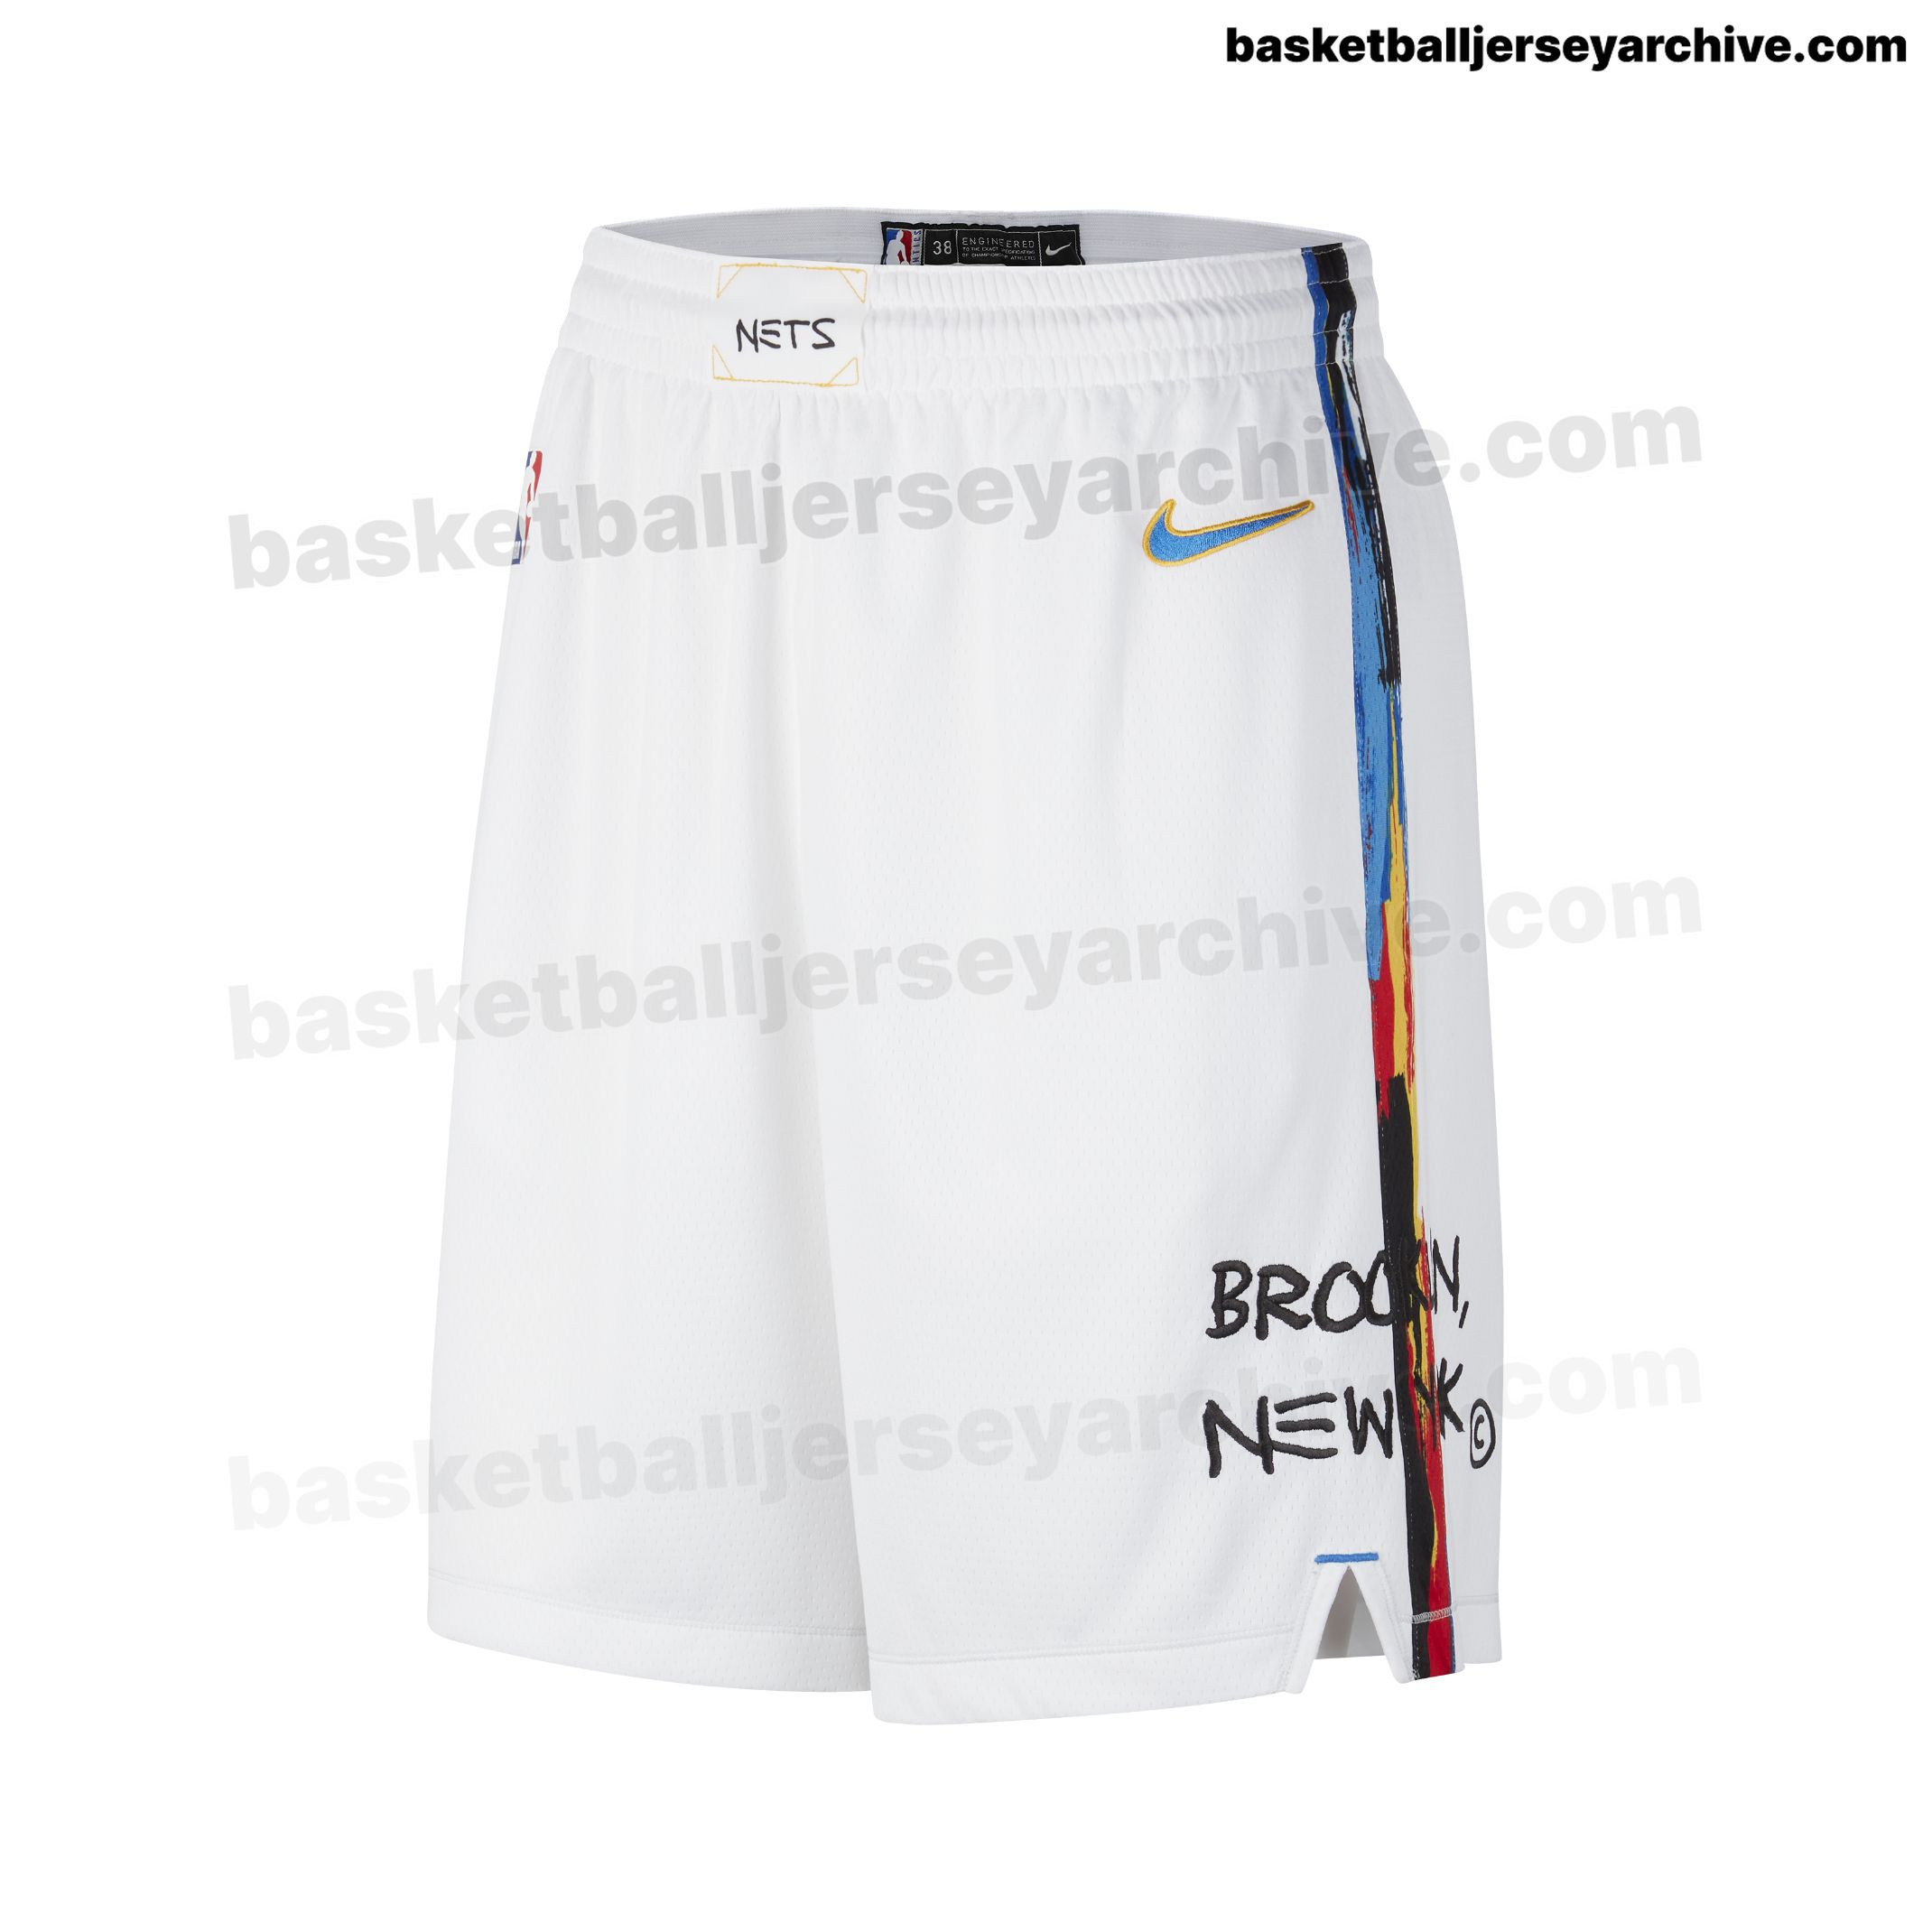 Brooklyn Nets City Edition Jersey 2022-23: Basquiat is Back